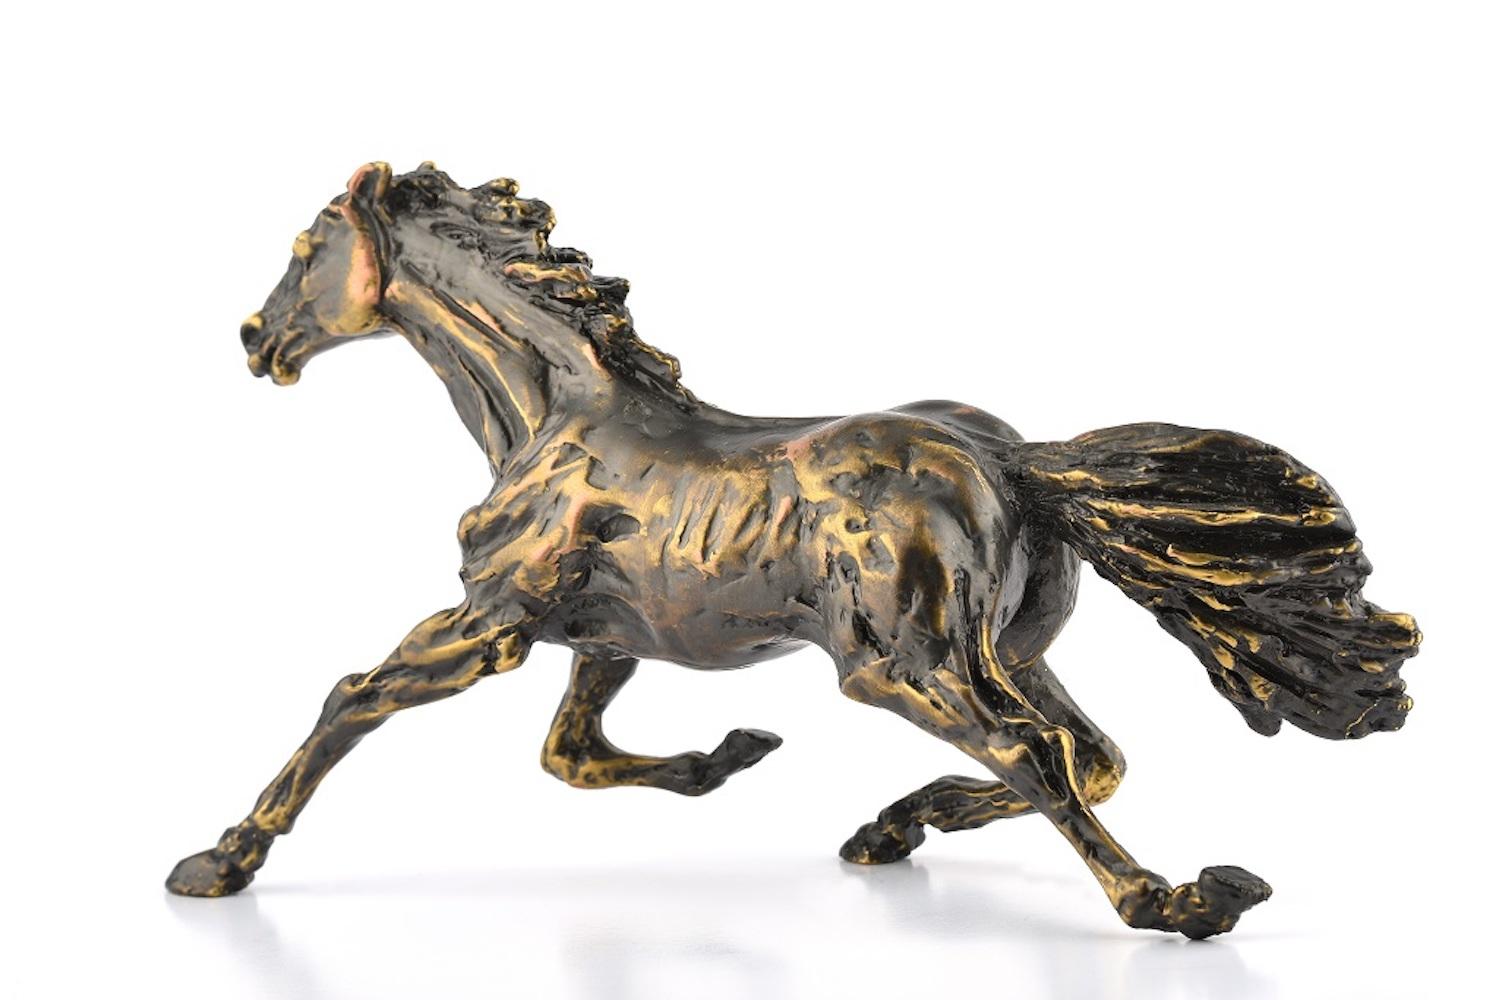 Running Horse - Bronze Sculpture by C. Mongini - 1970s - Gold Figurative Sculpture by Costanzo Mongini